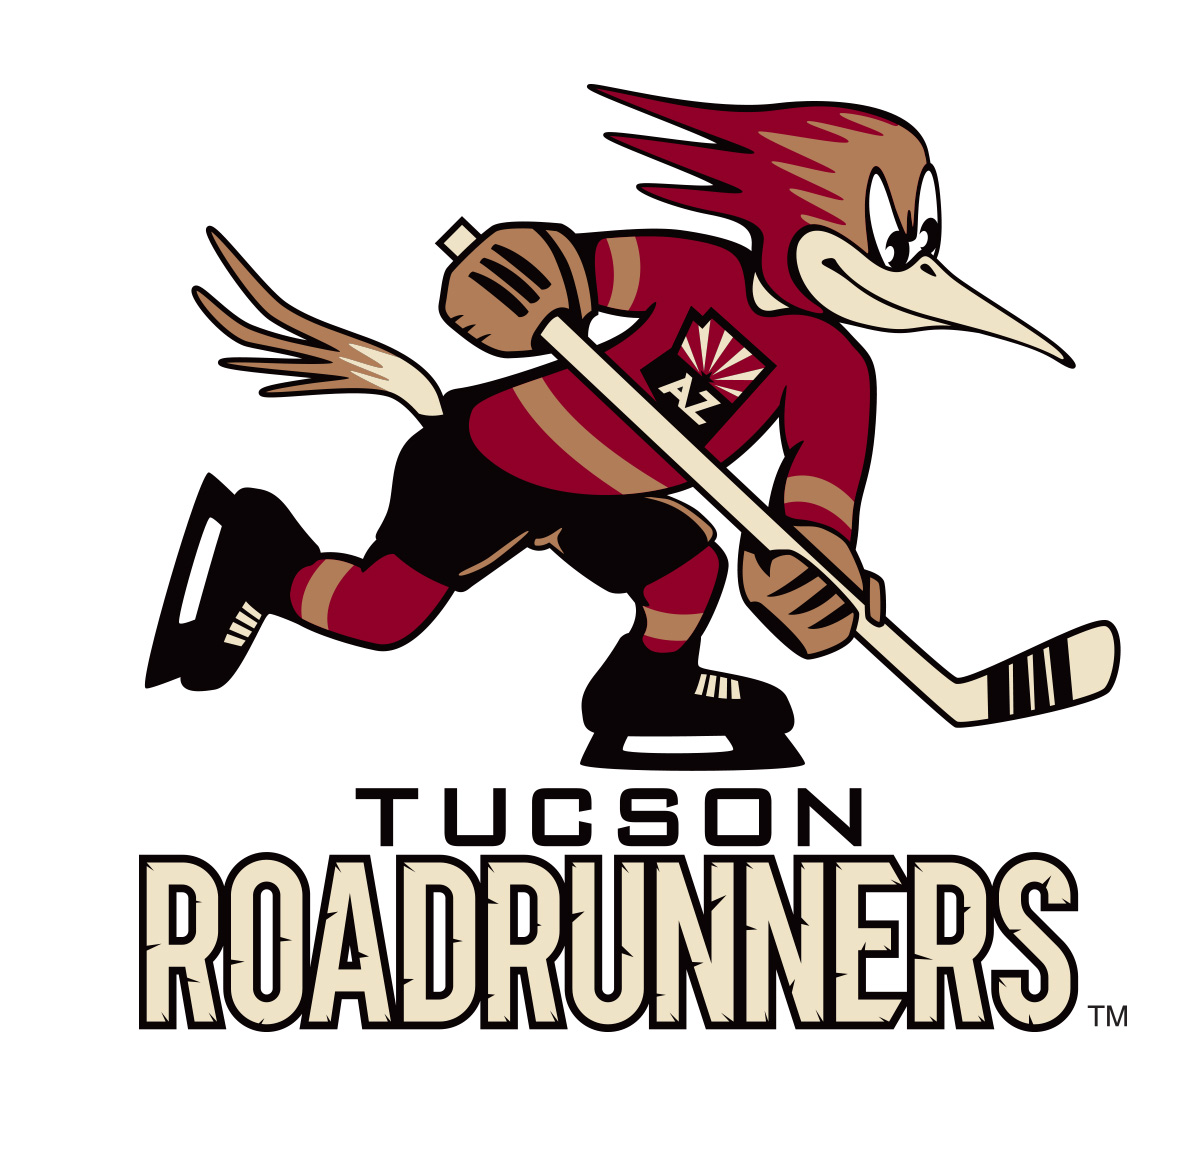 Tucson Roadrunners on X: Want a free Kachina third jersey? Renew